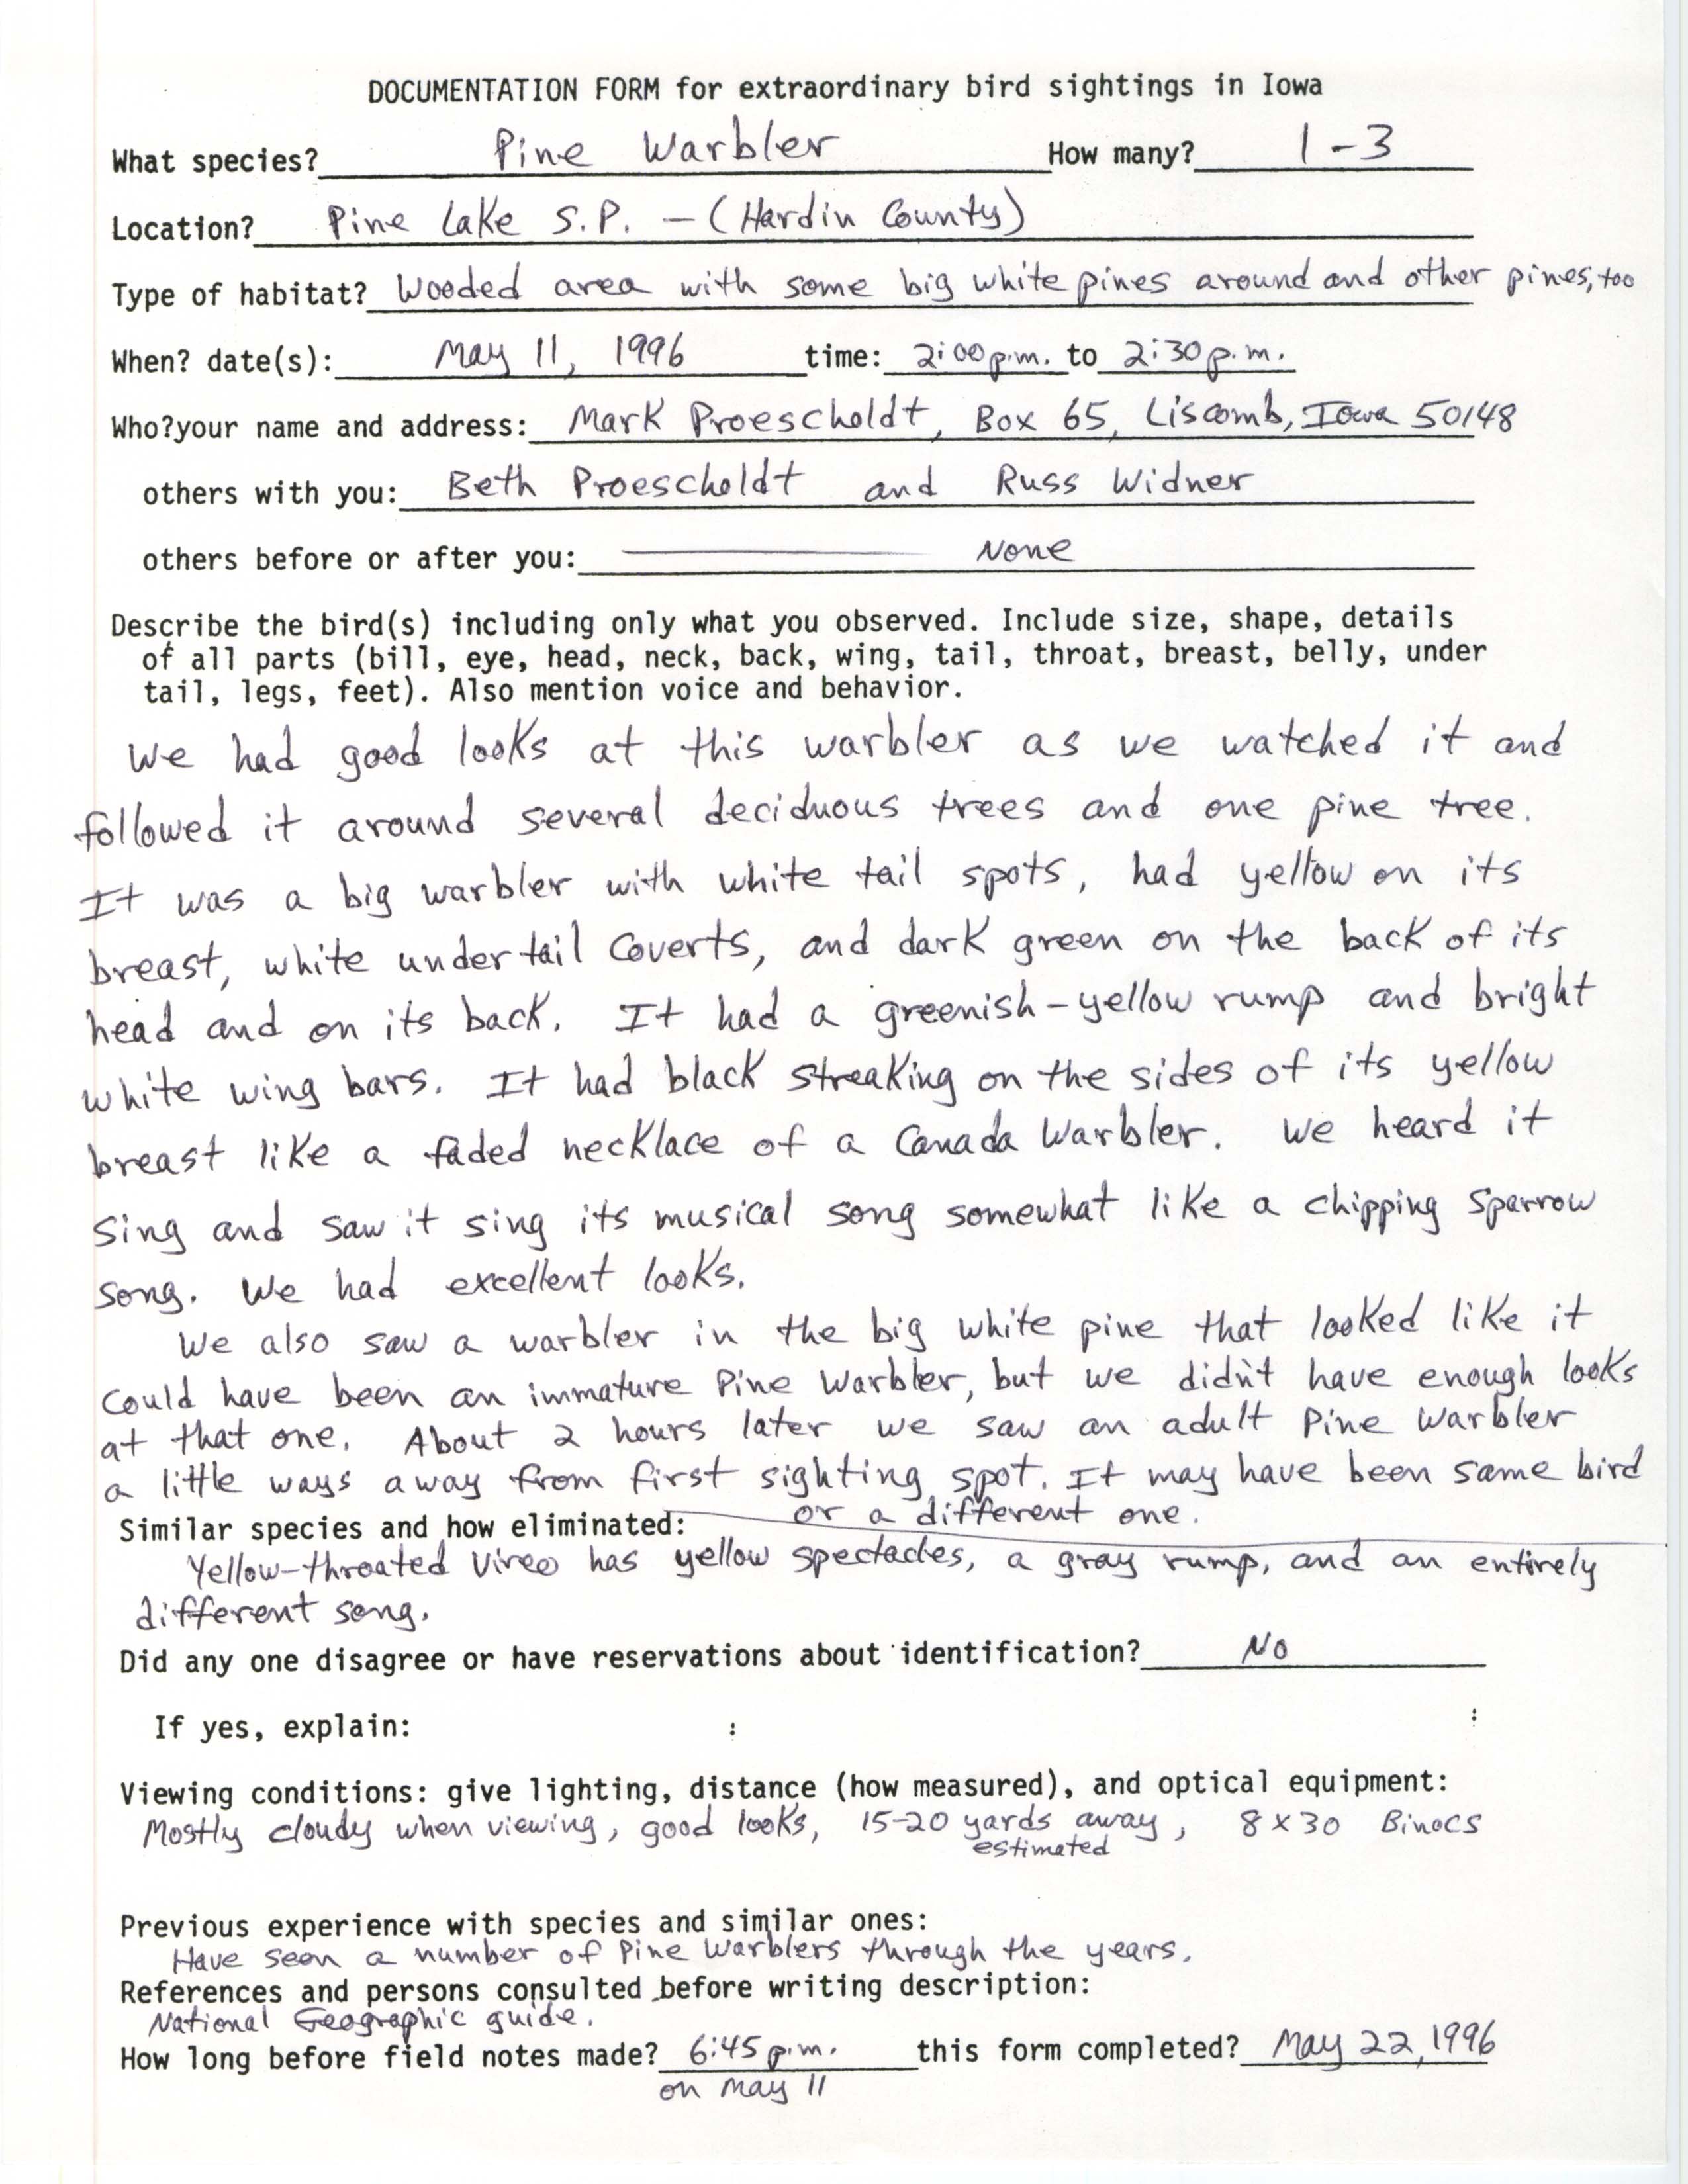 Rare bird documentation form for Pine Warbler at Pine Lake State Park, 1996